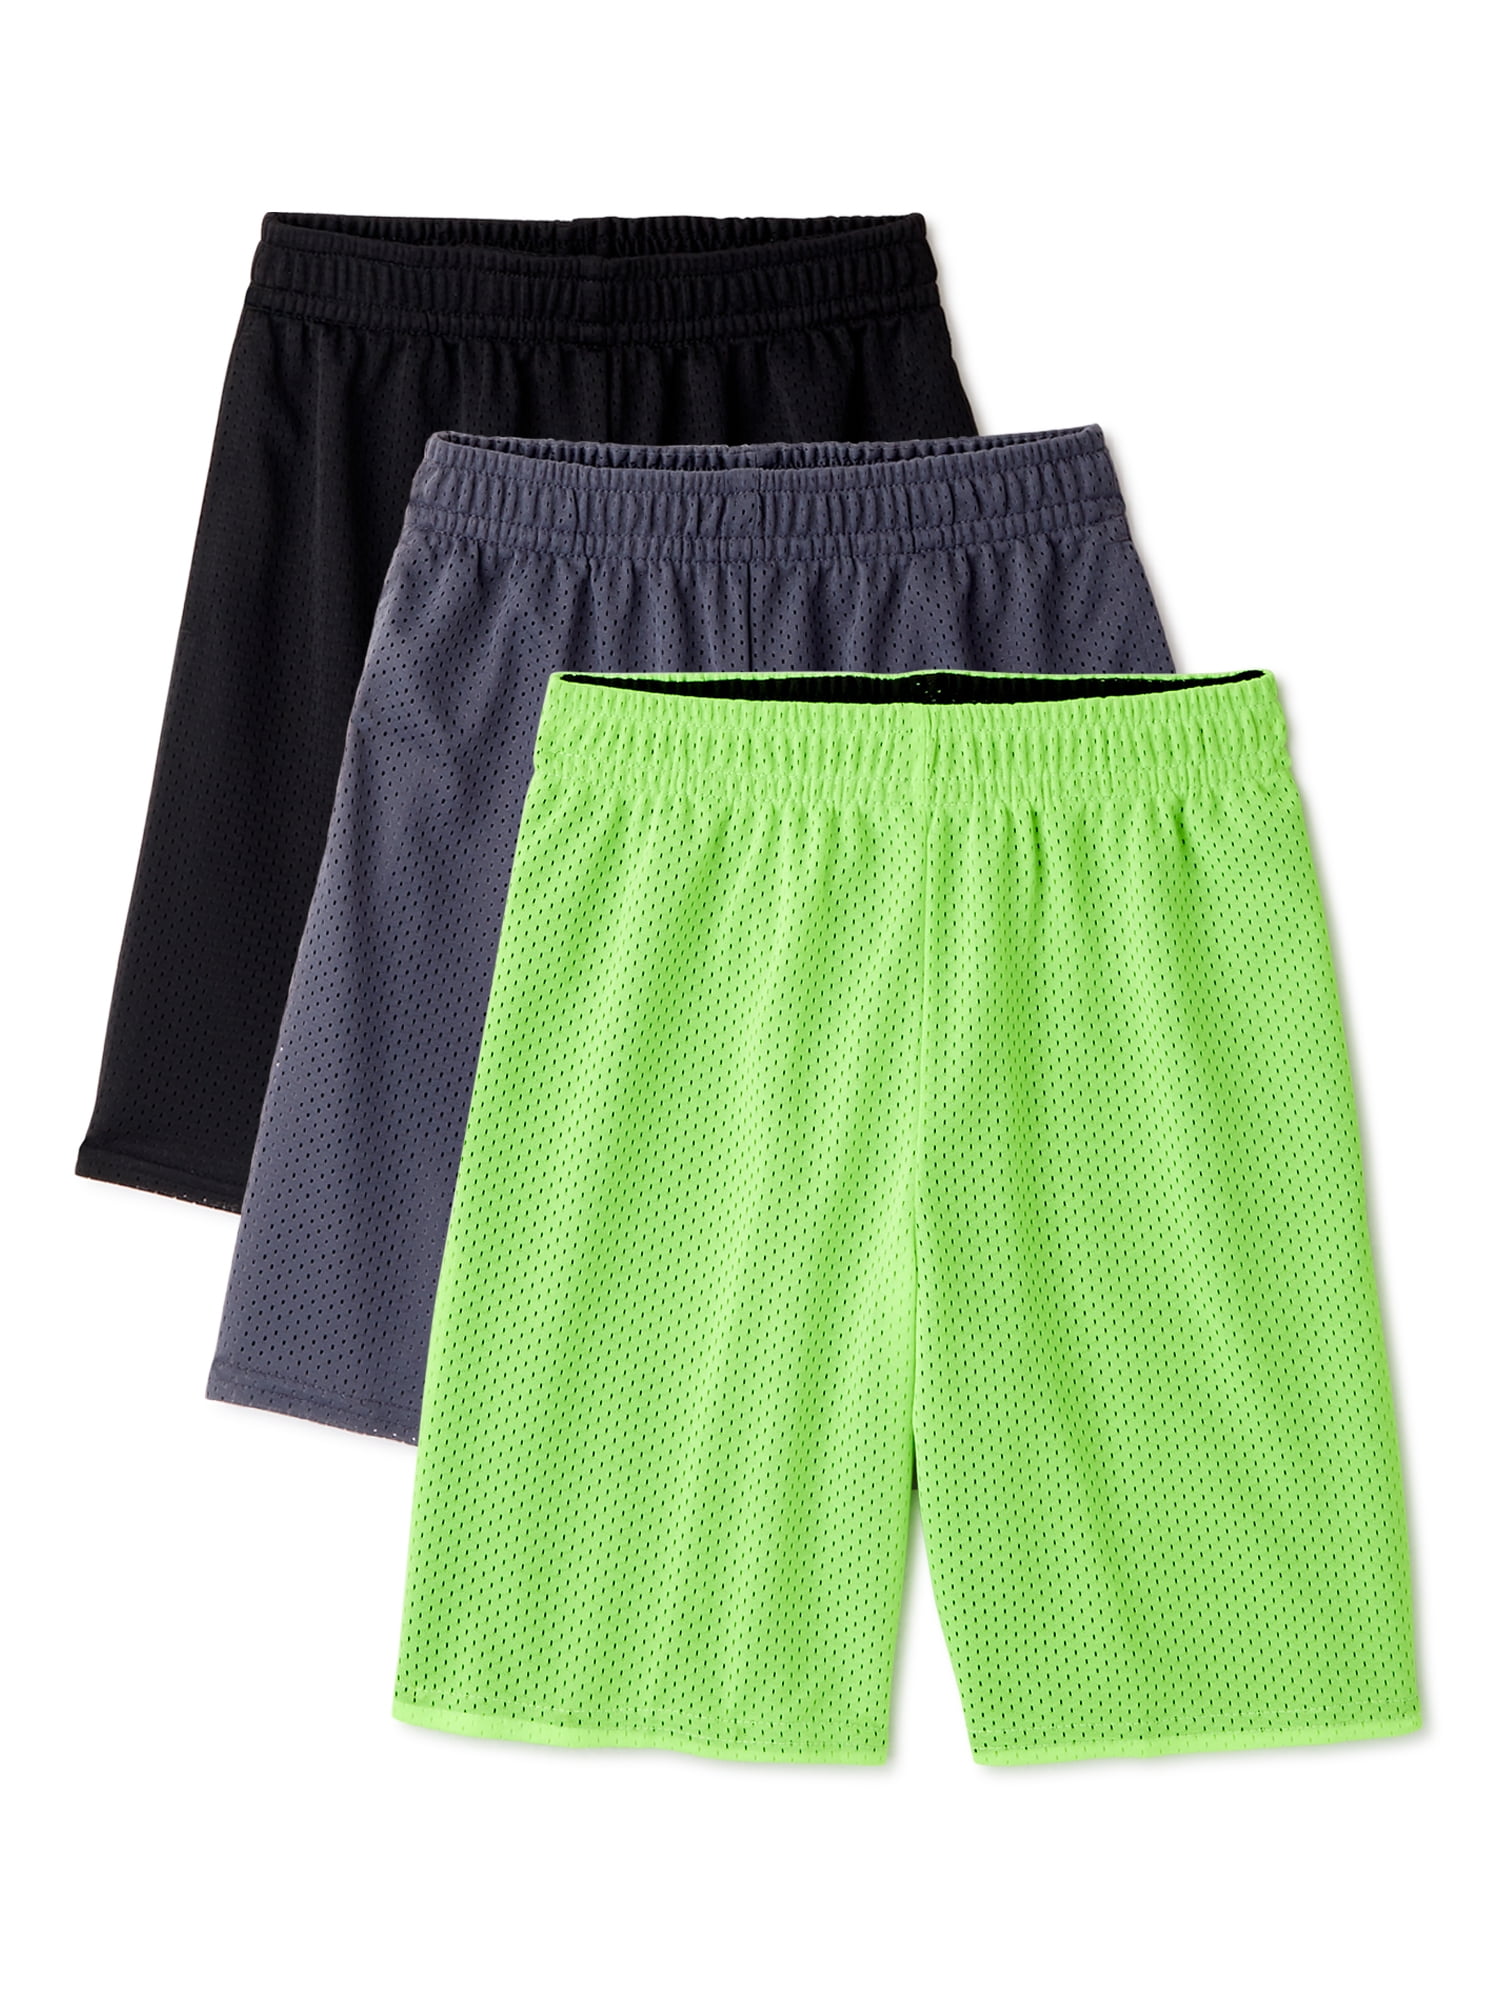 Athletic Works Boys Mesh Shorts, 3-Pack, Sizes 4-18 Husky | eduaspirant.com